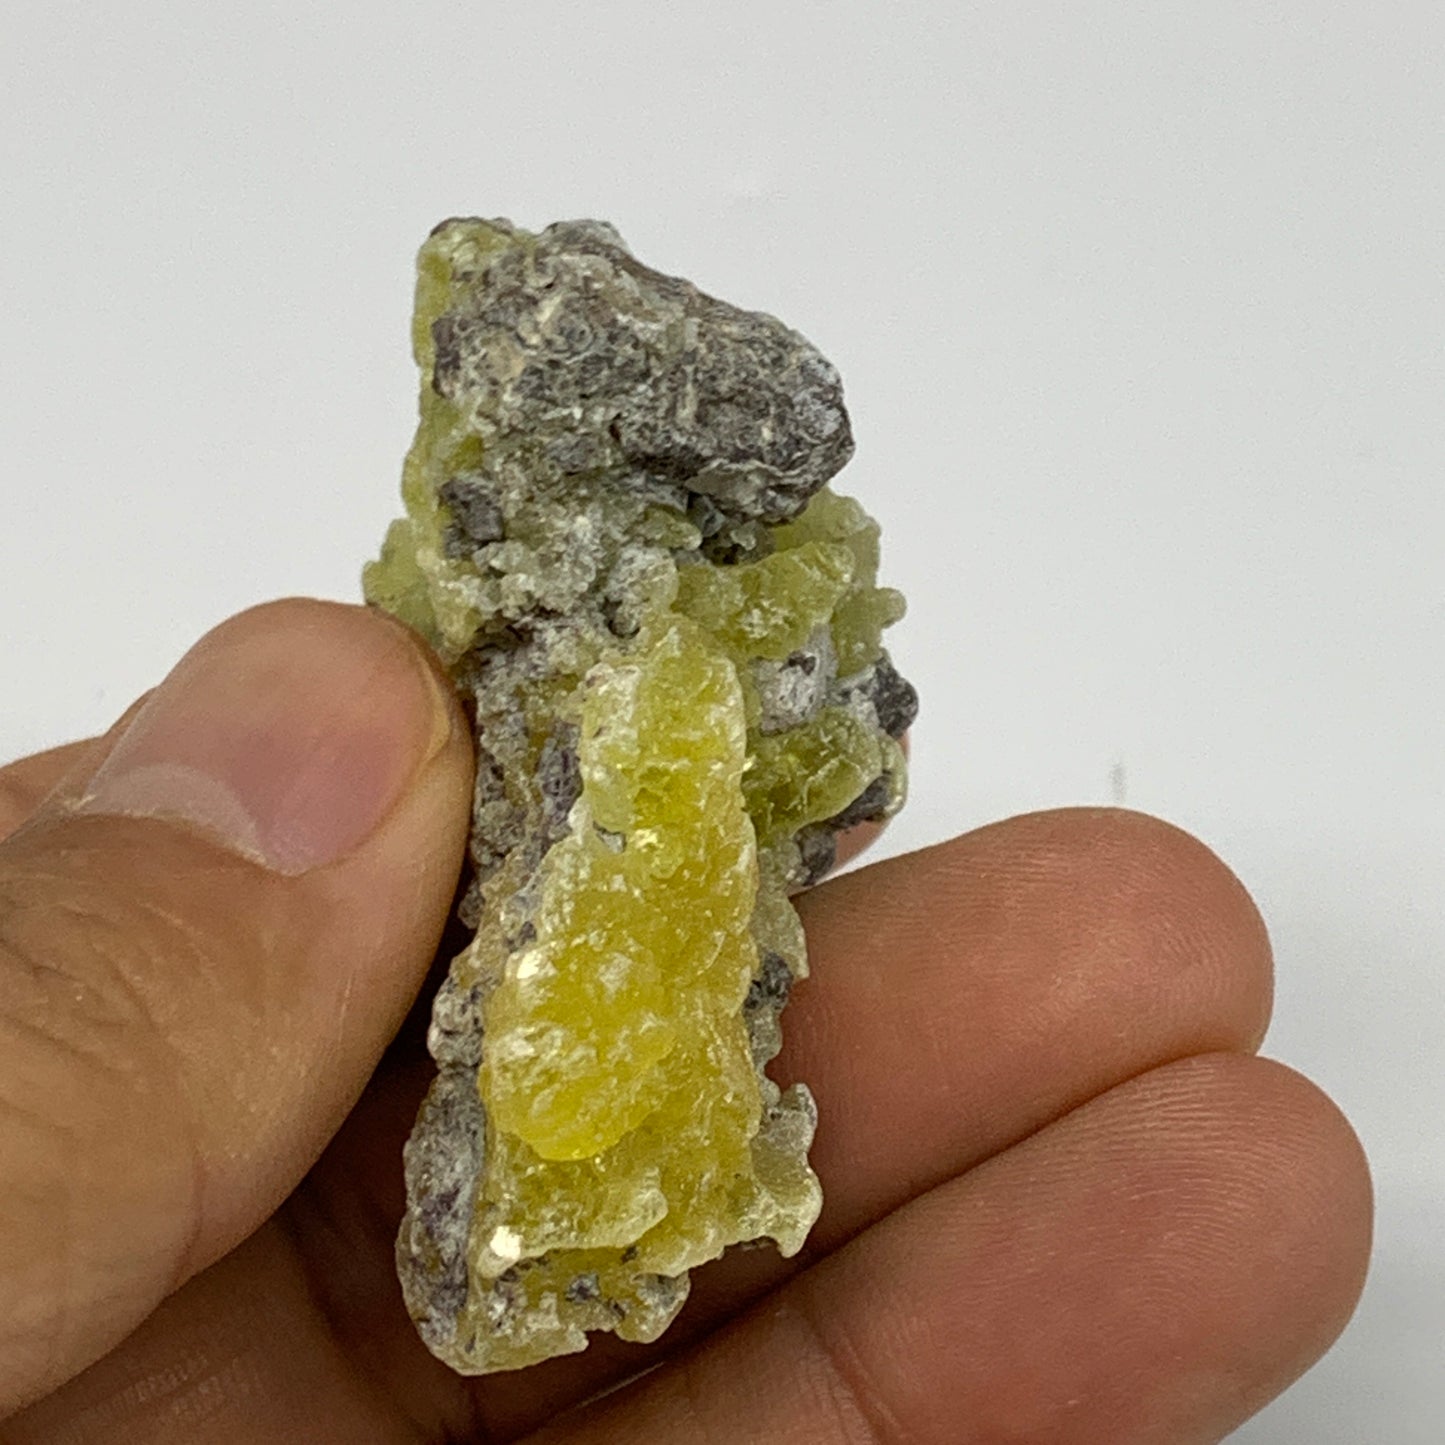 24.8g, 2"x1.4"x0.9", Rough Brucite Crystal Mineral Specimens @Pakistan, B27371